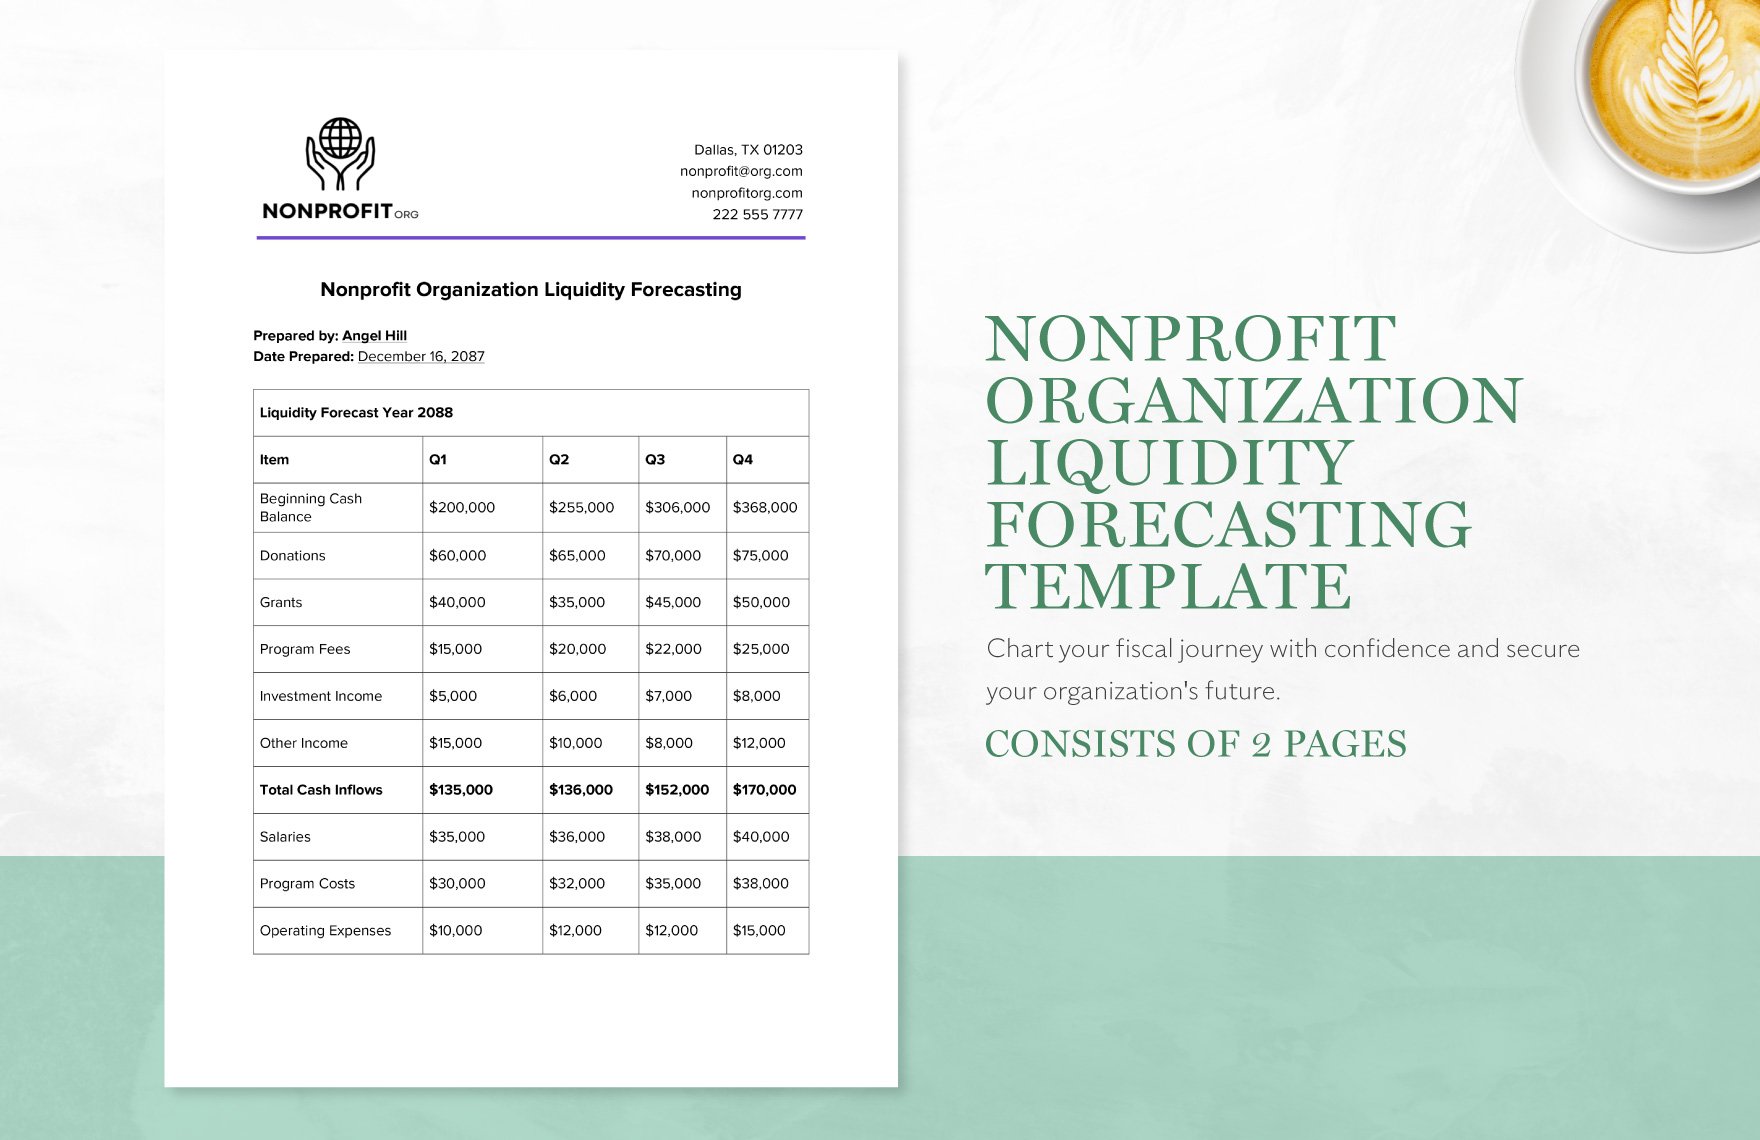 Nonprofit Organization Liquidity Forecasting Template